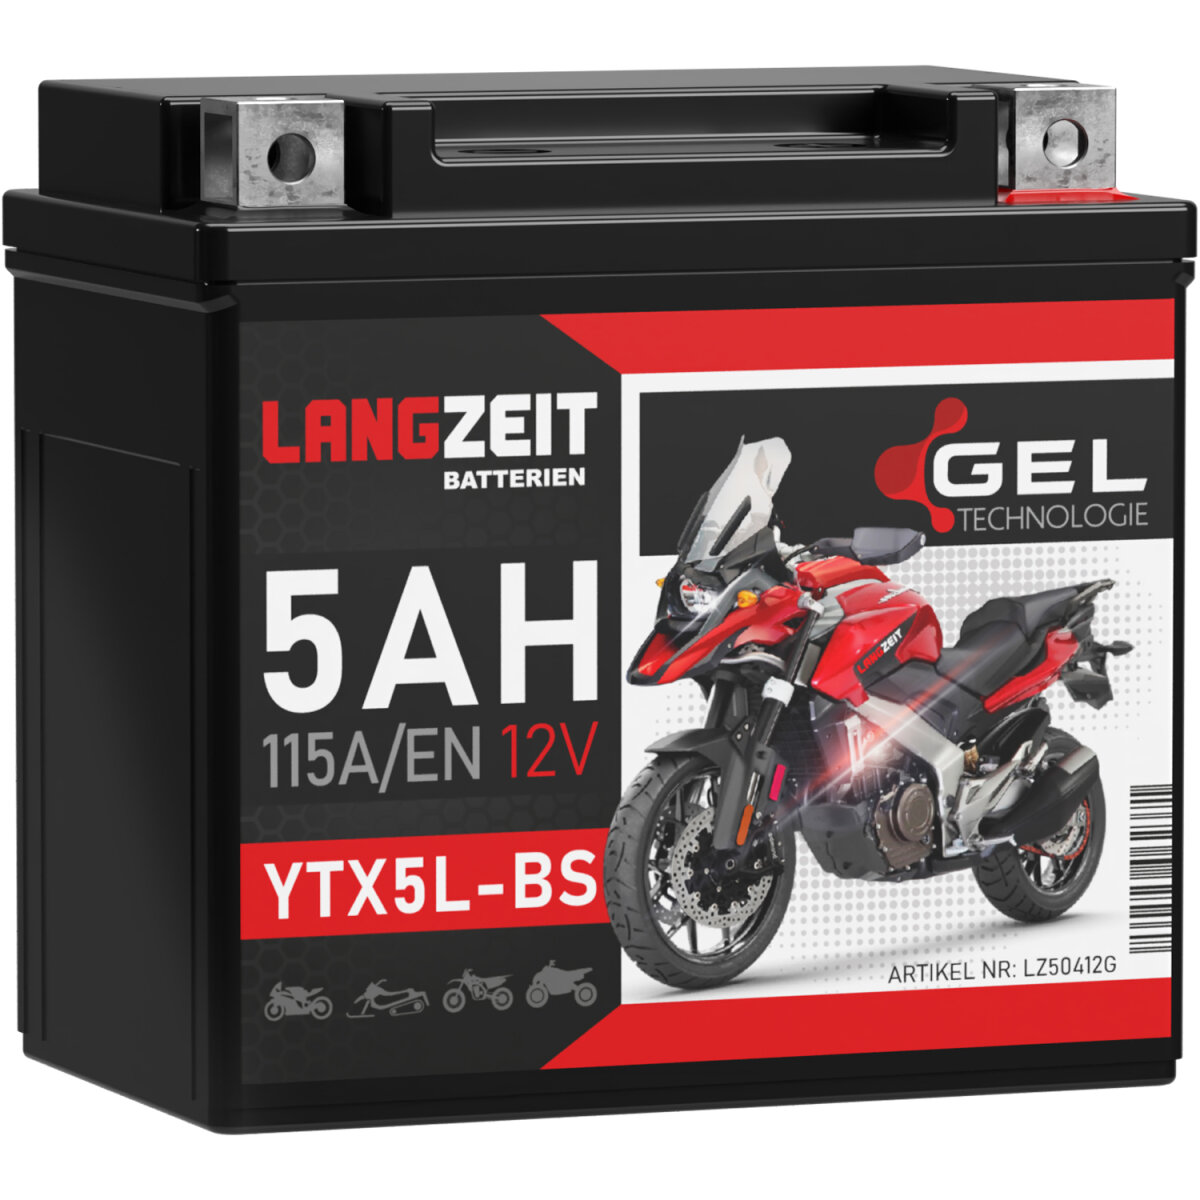 https://www.batteriespezialist.de/media/image/product/5669/lg/langzeit-gel-motorradbatterie-ytx5l-bs-5ah-12v.jpg